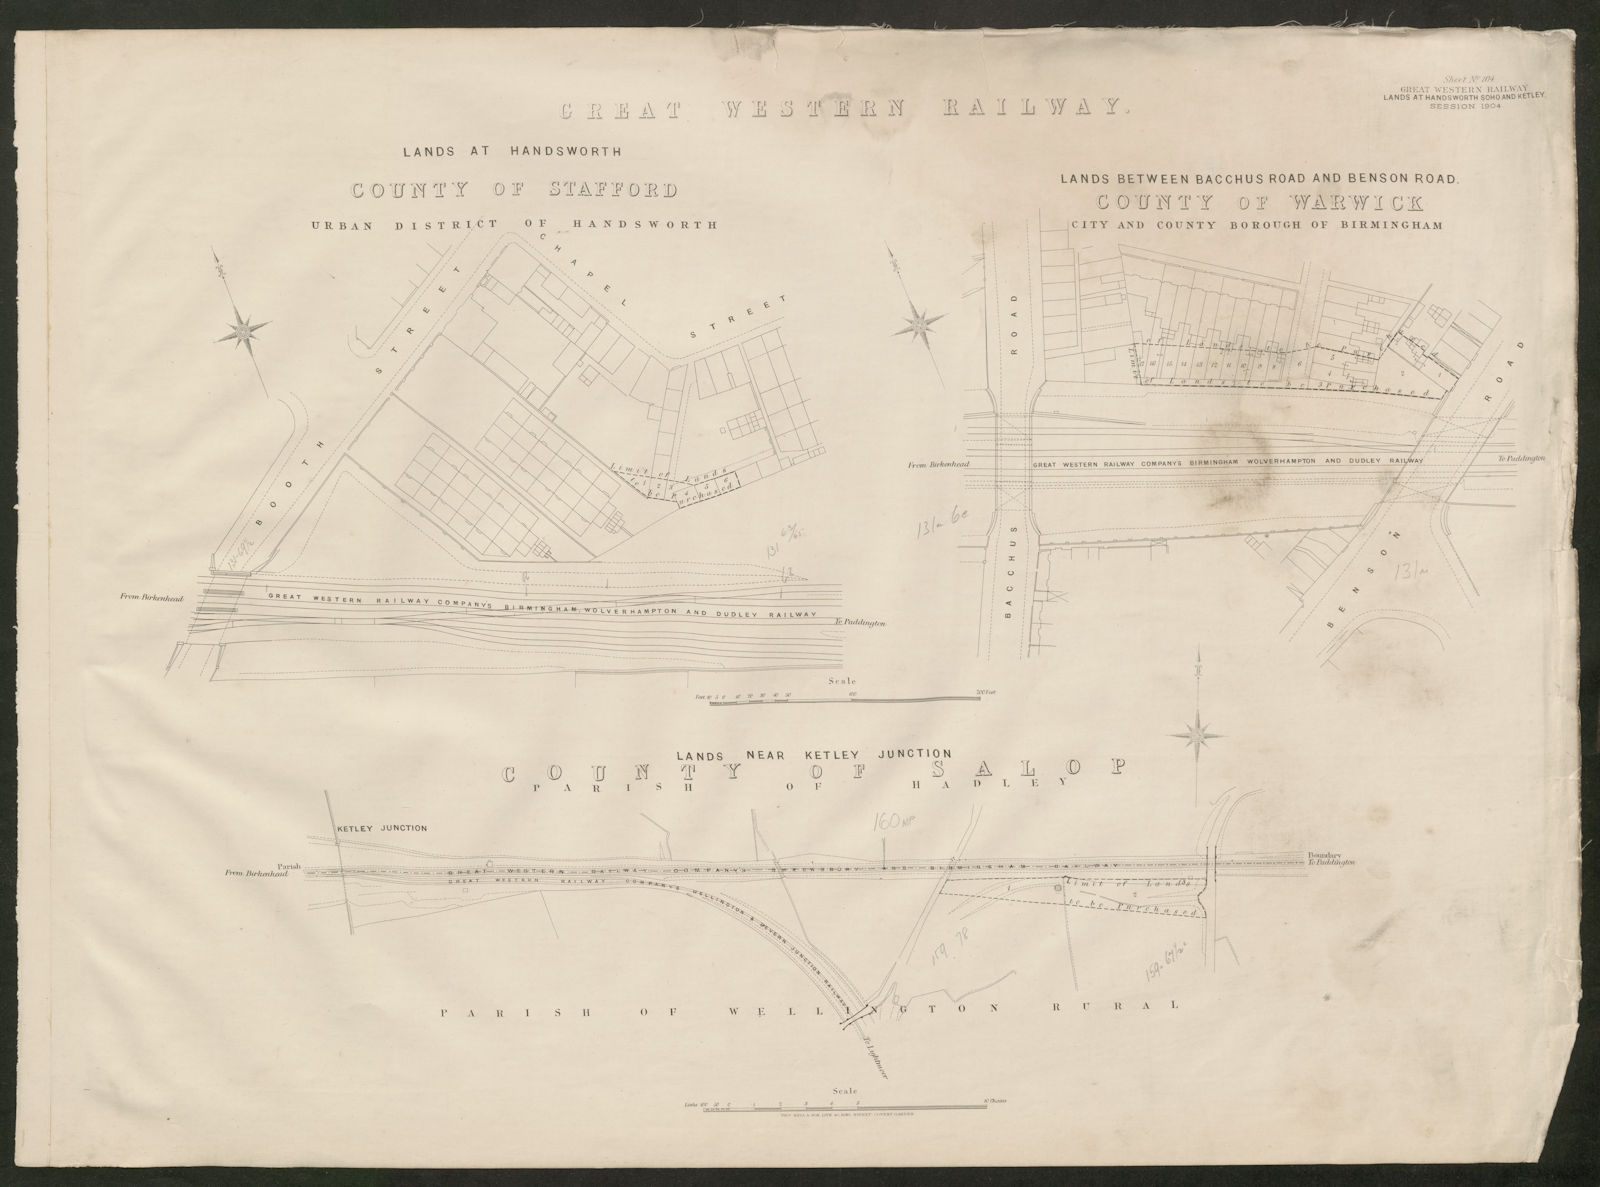 GWR railway plan Birmingham Handsworth Booth Street Bacchus/Benson Road 1904 map